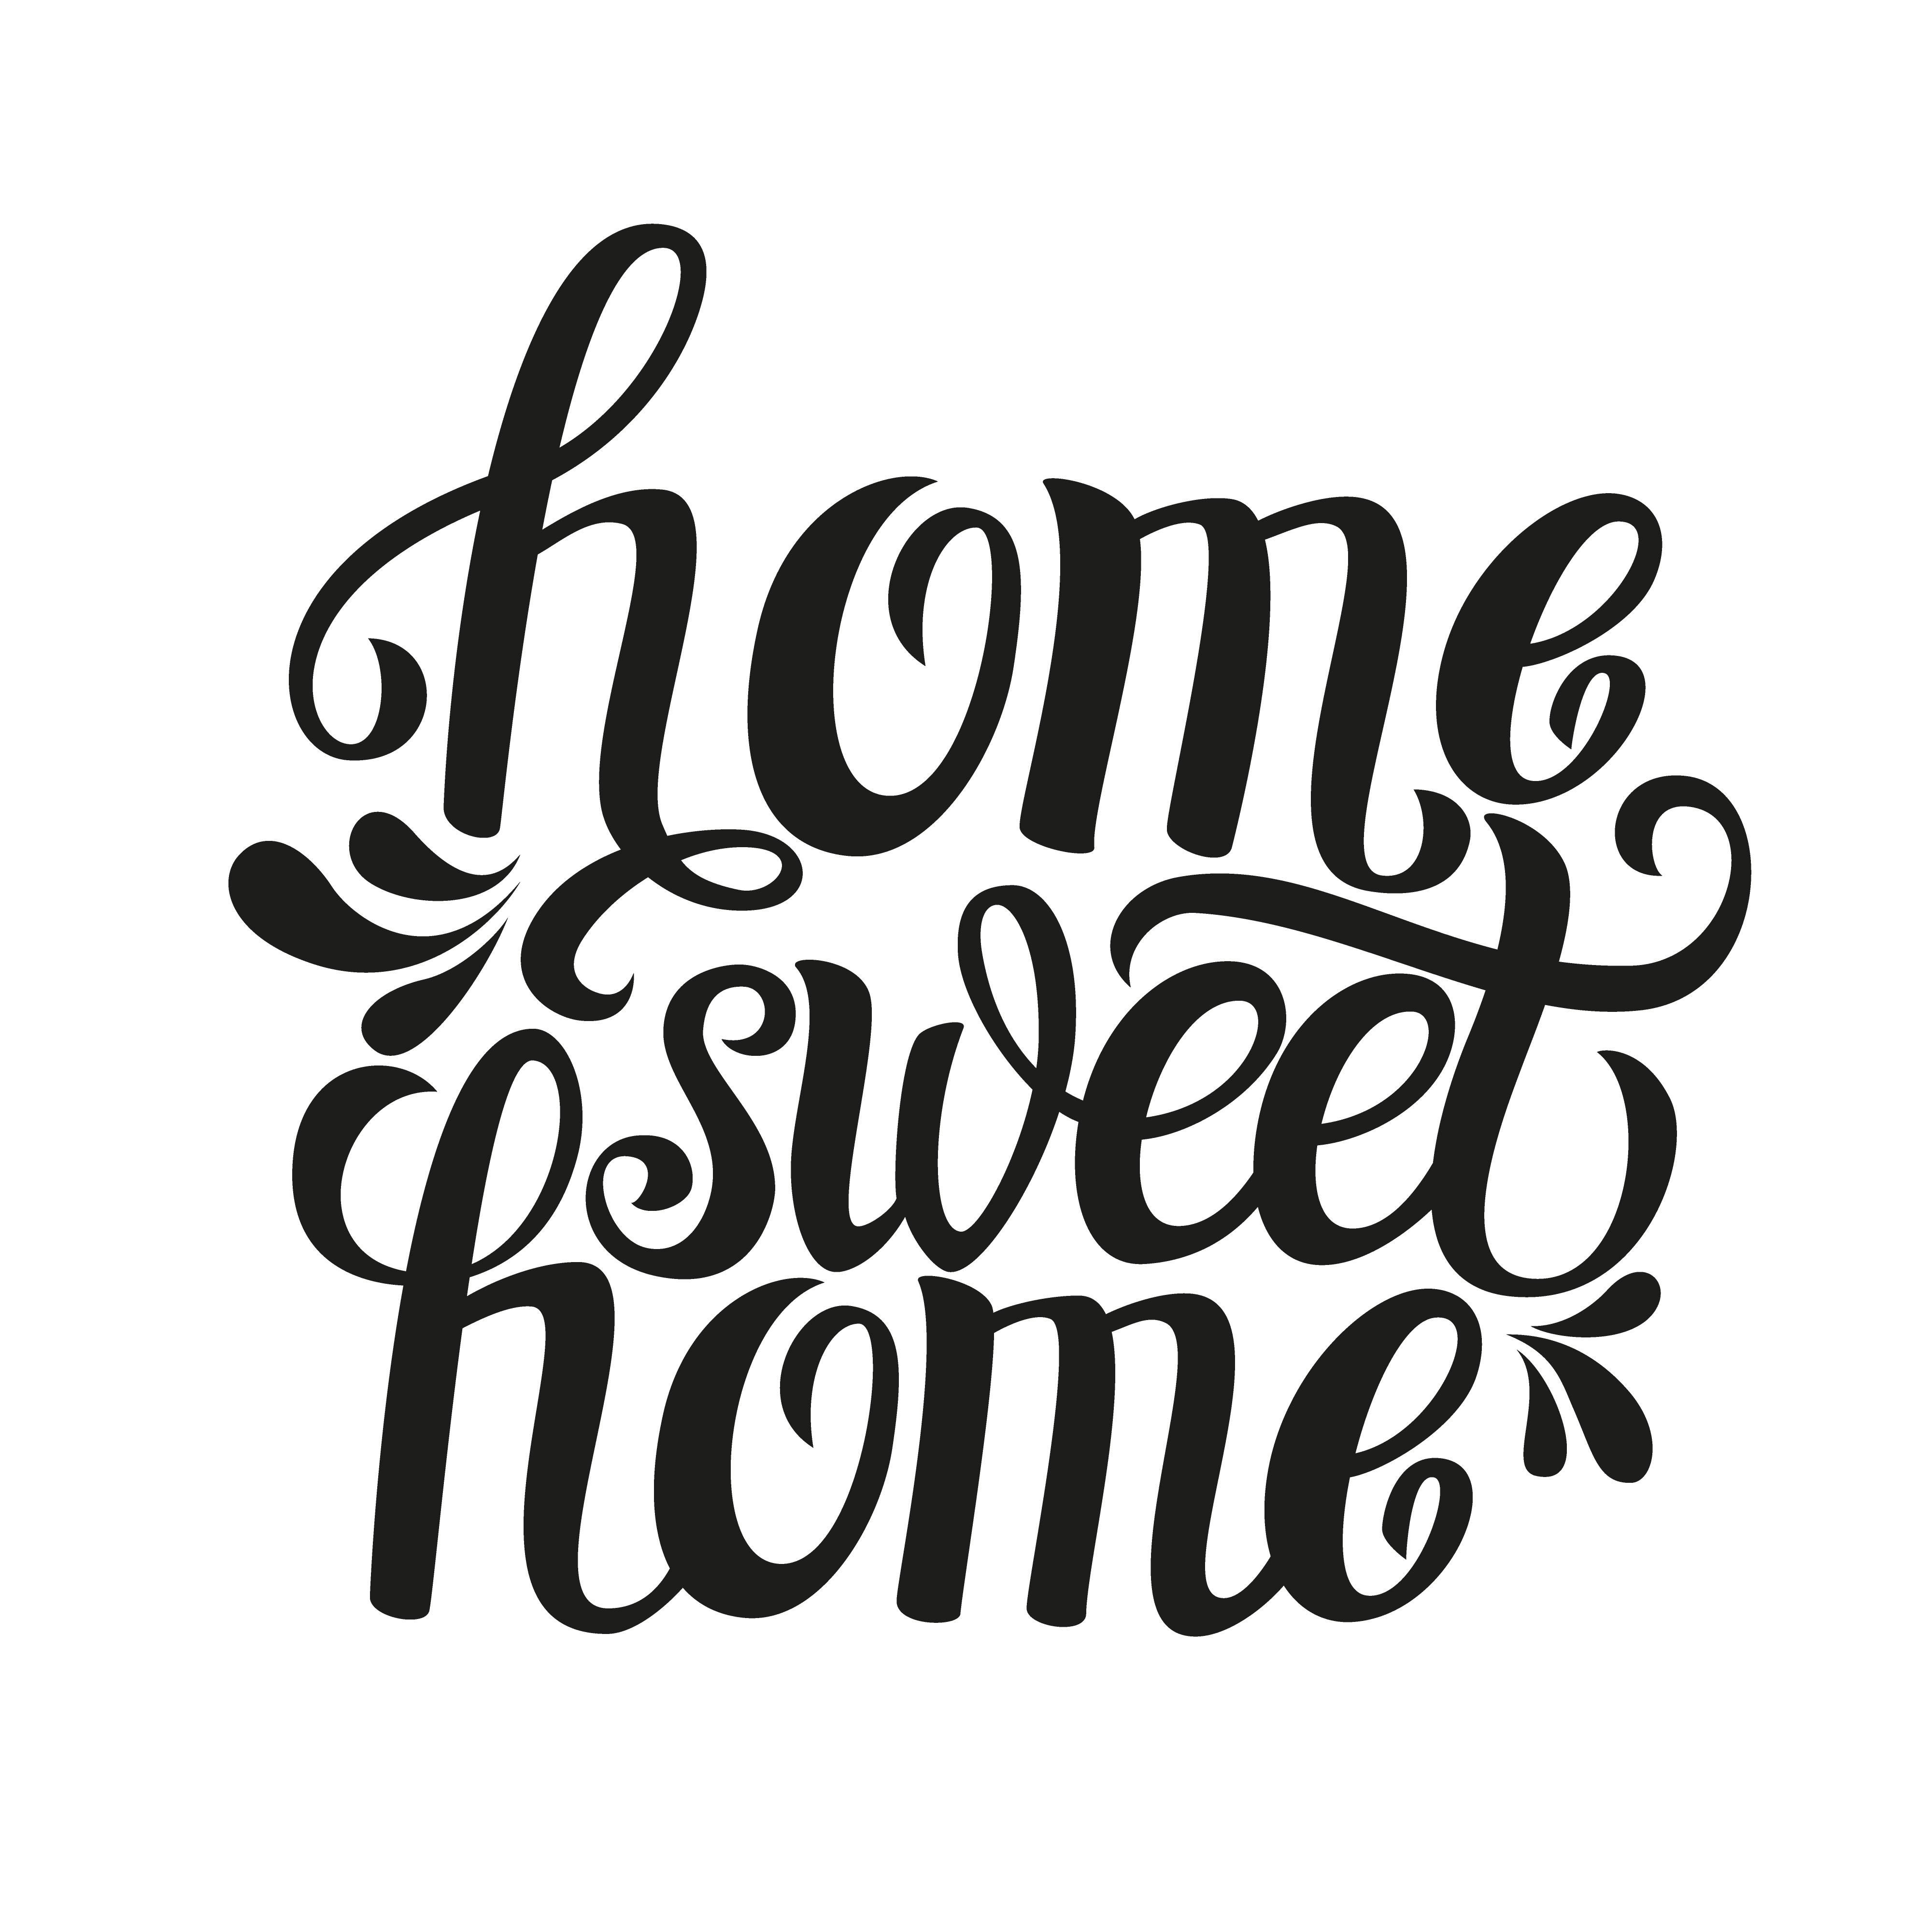 home sweet home wallpaper